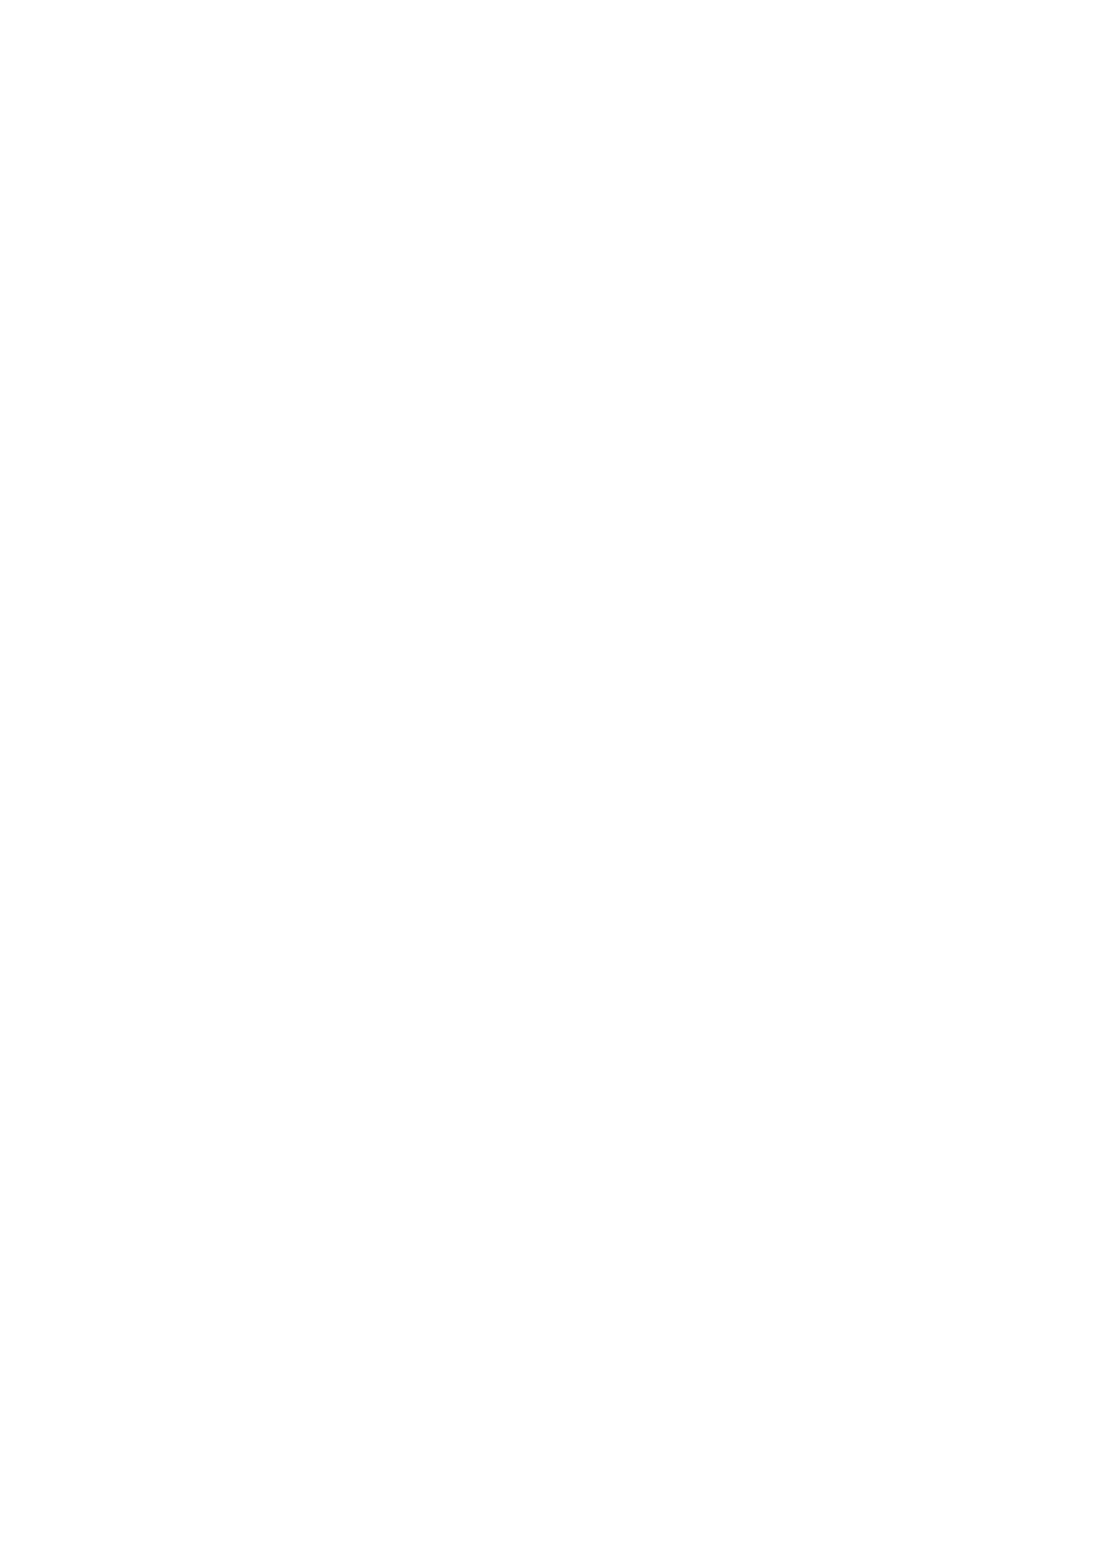 Quantafuel logo for dark backgrounds (transparent PNG)